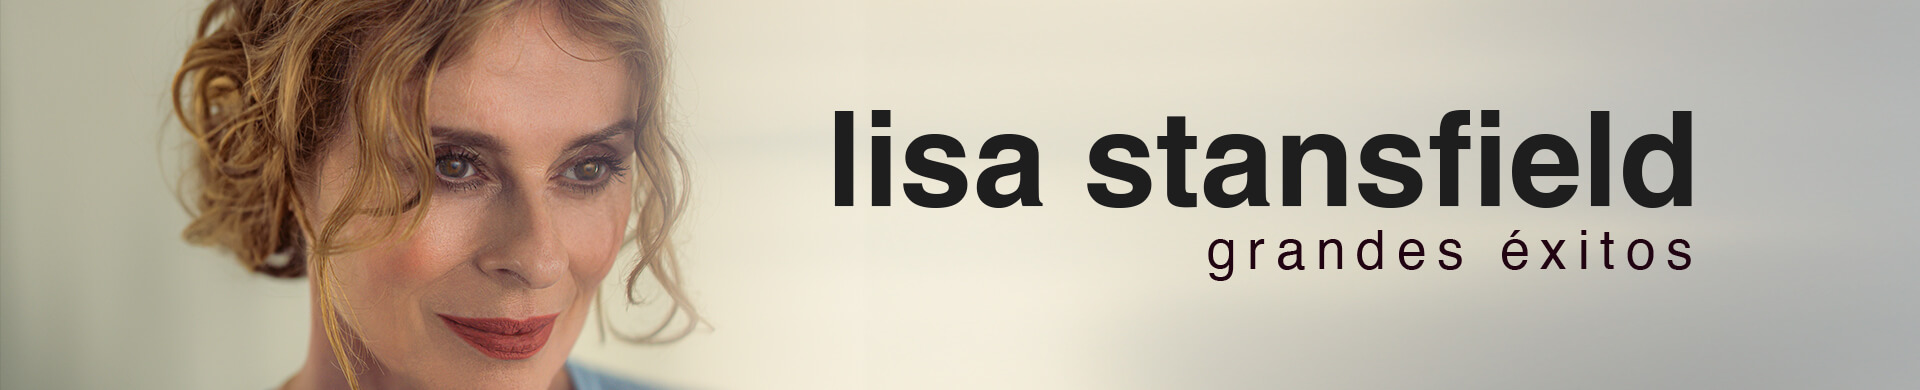 <p>LISA STANFIELD</p>
